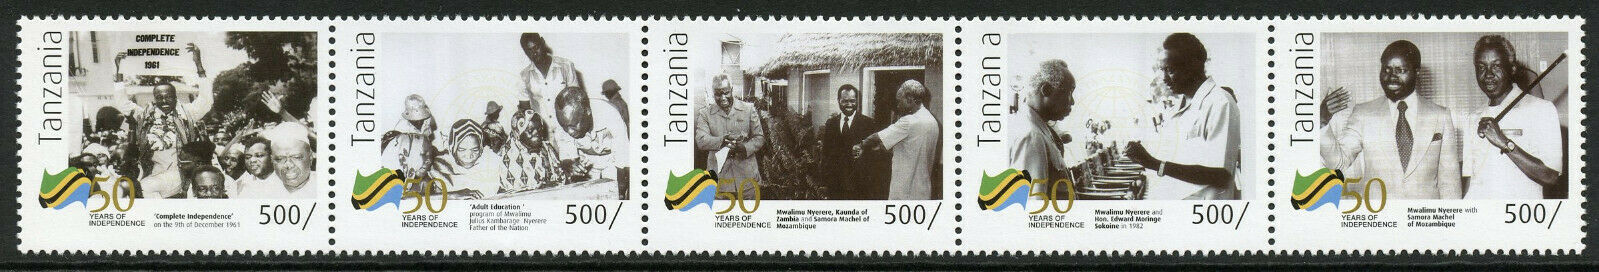 Tanzania 2011 MNH Politicians Stamps Indepence Mwalimu Nyerere People 5v Strip